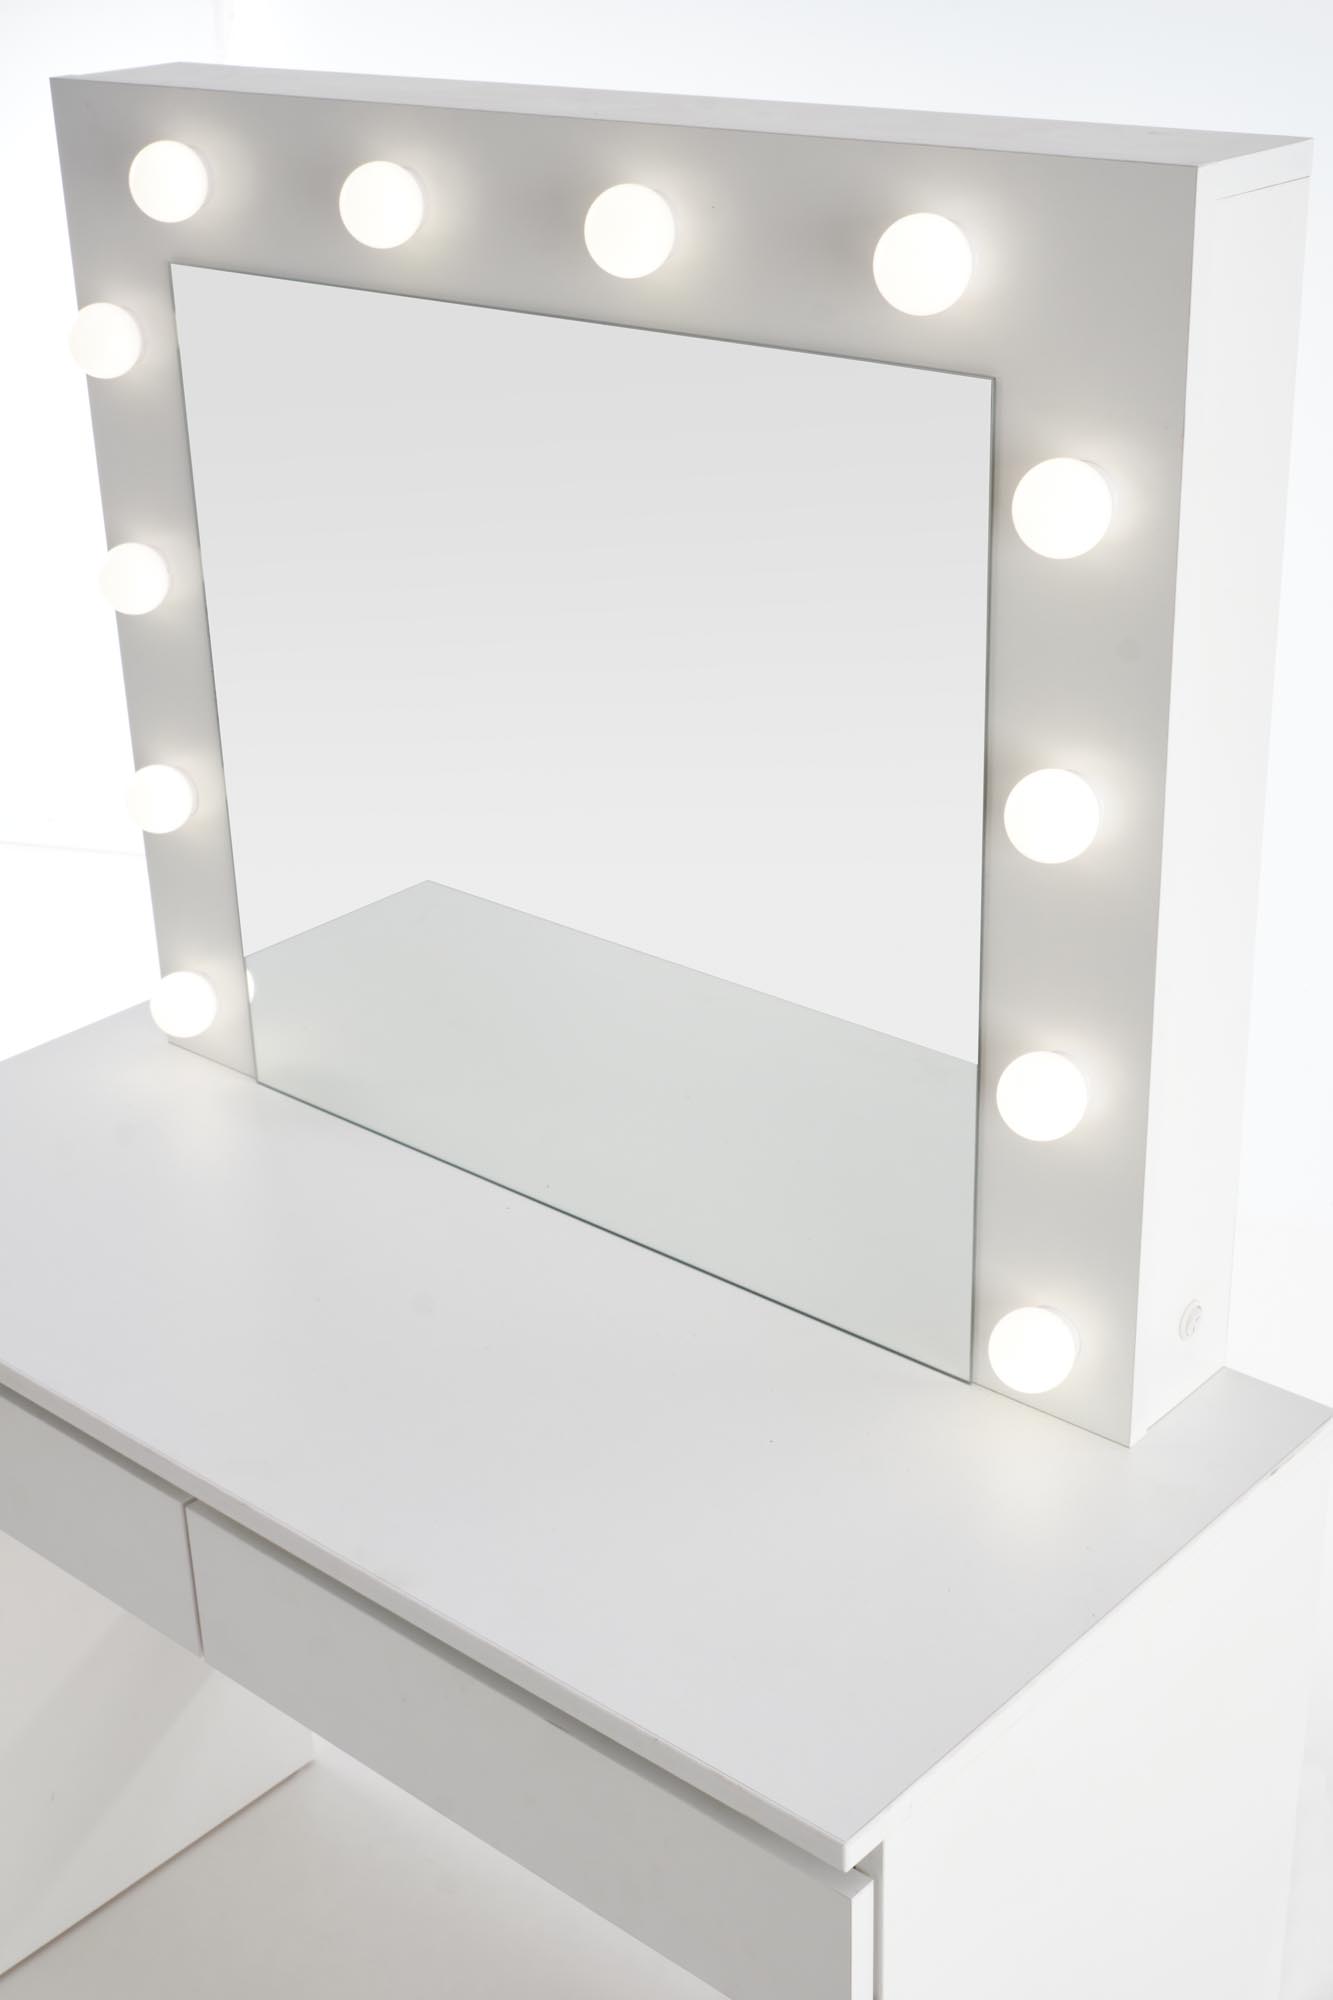 Hollywood modern sminkasztal, világítással - fehér moderní Toaletní stolek Hollywood s osvětlením - Bílý